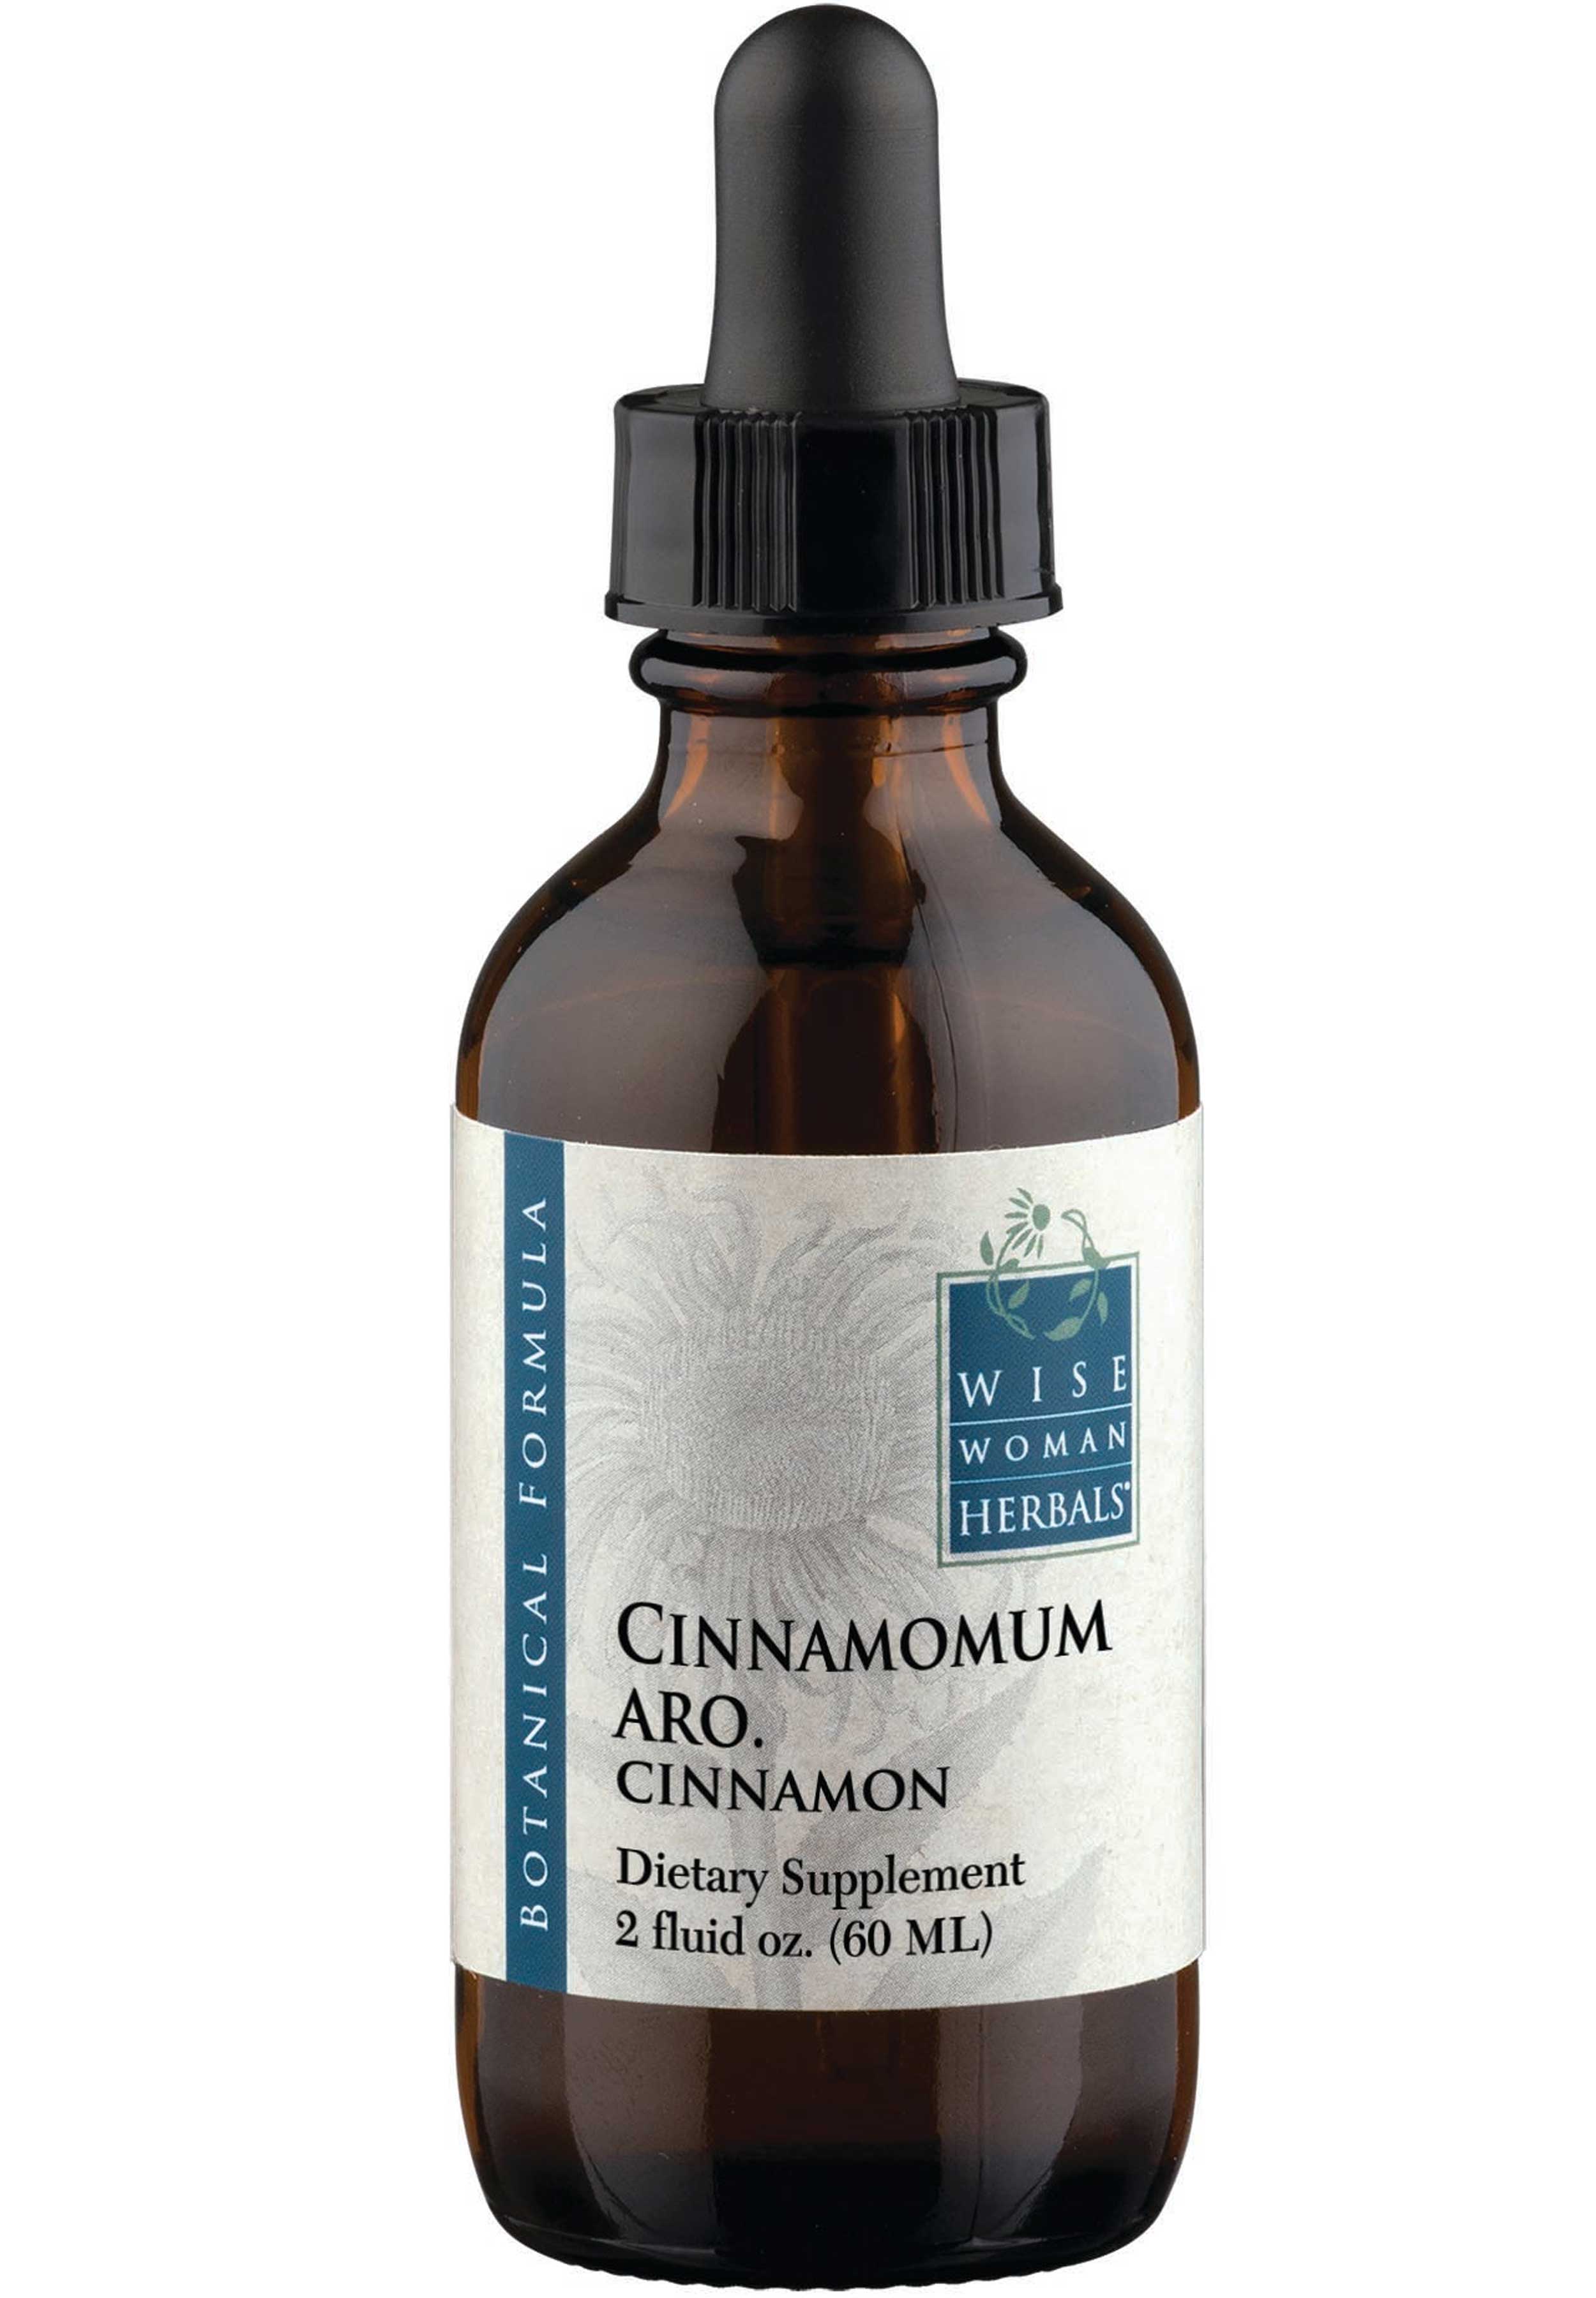 Wise Woman Herbals Cinnamomum Aromaticum Cinnamon